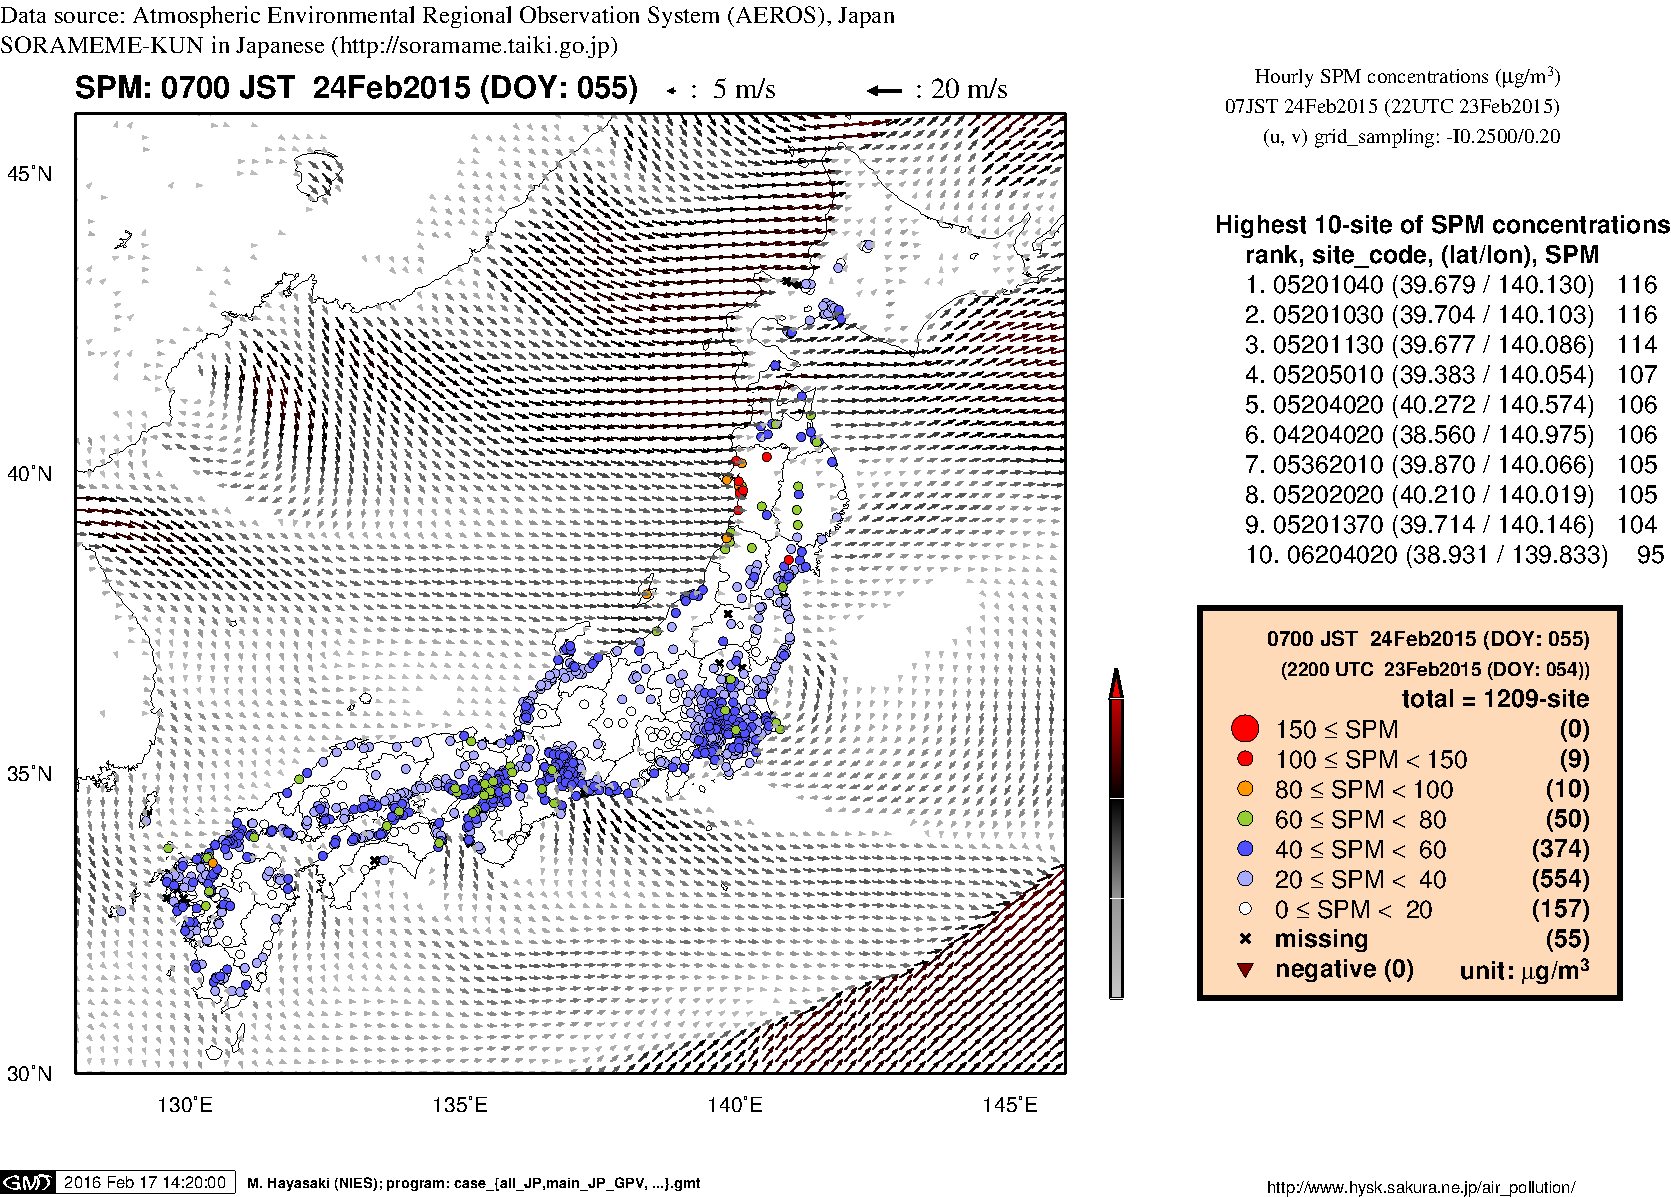 SPM concentration in mainland Japan (07JST 24Feb2015)